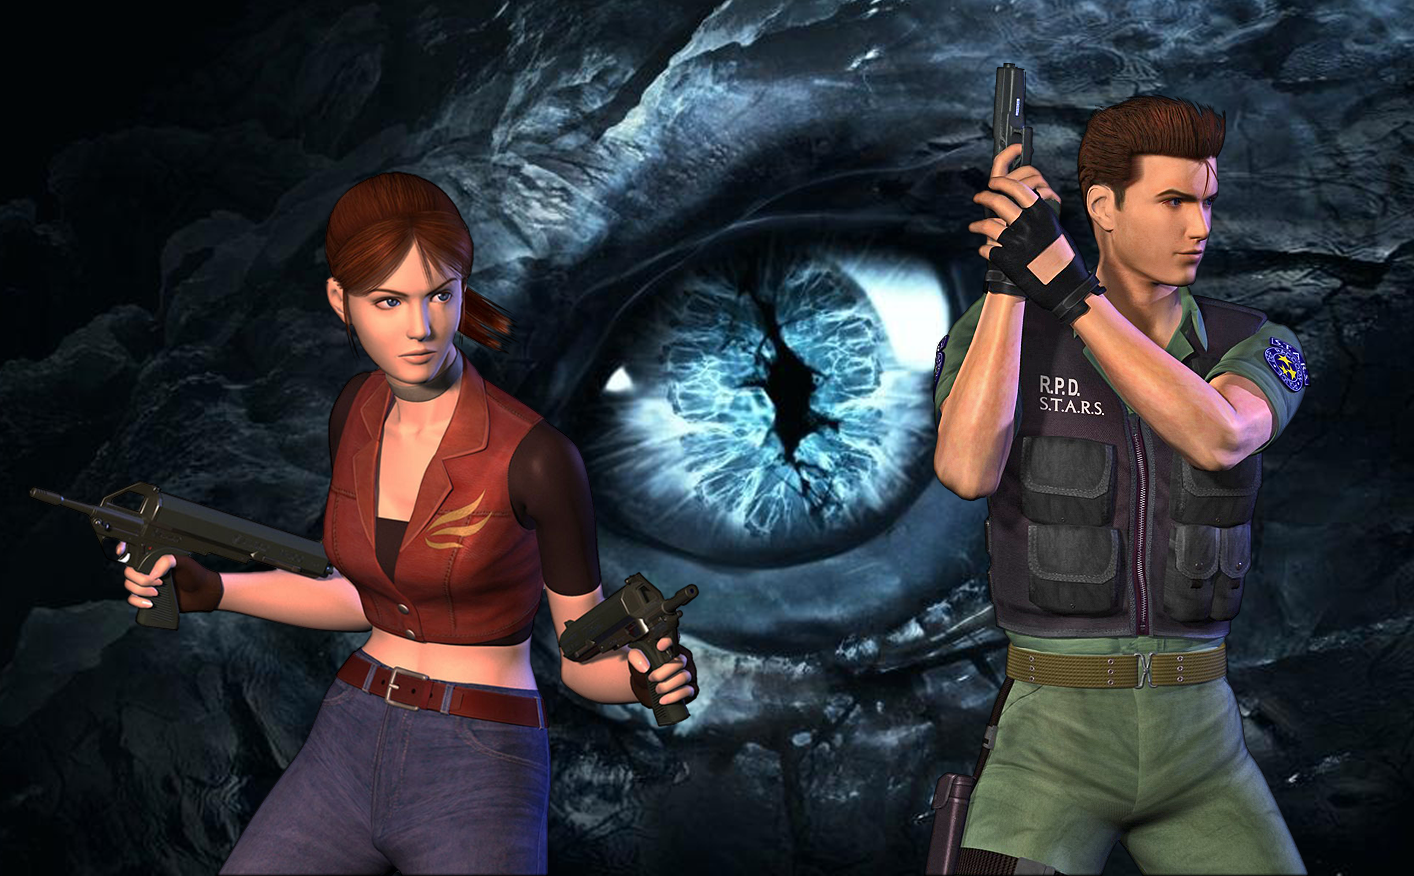 Strange Dark Stories: The Notion of Duality in Resident Evil: Code